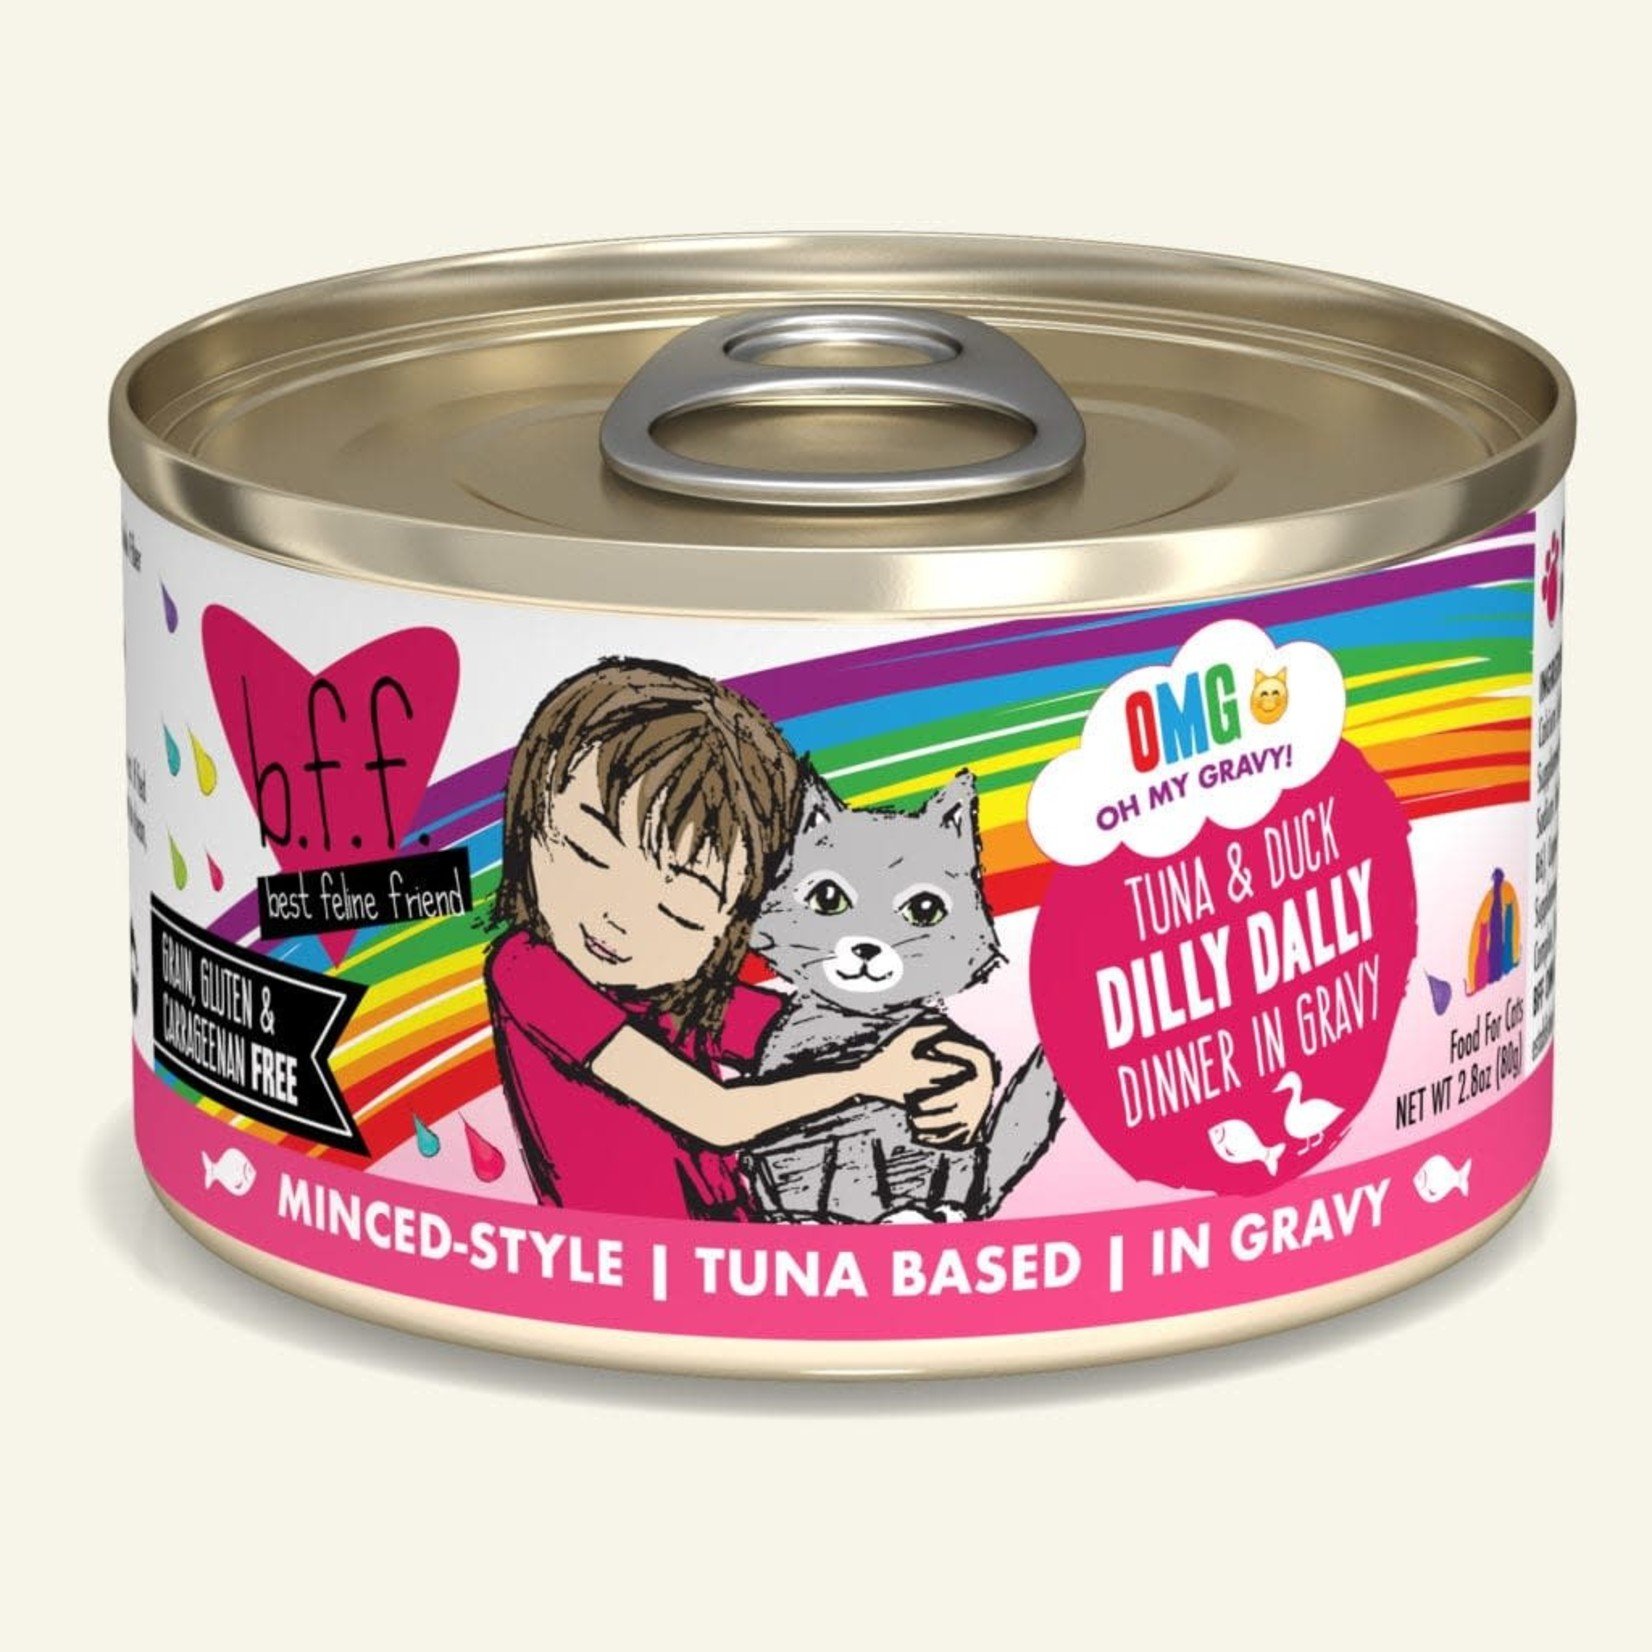 Weruva BFF OMG Cat Tuna & Duck Dilly Dally 2.8 OZ